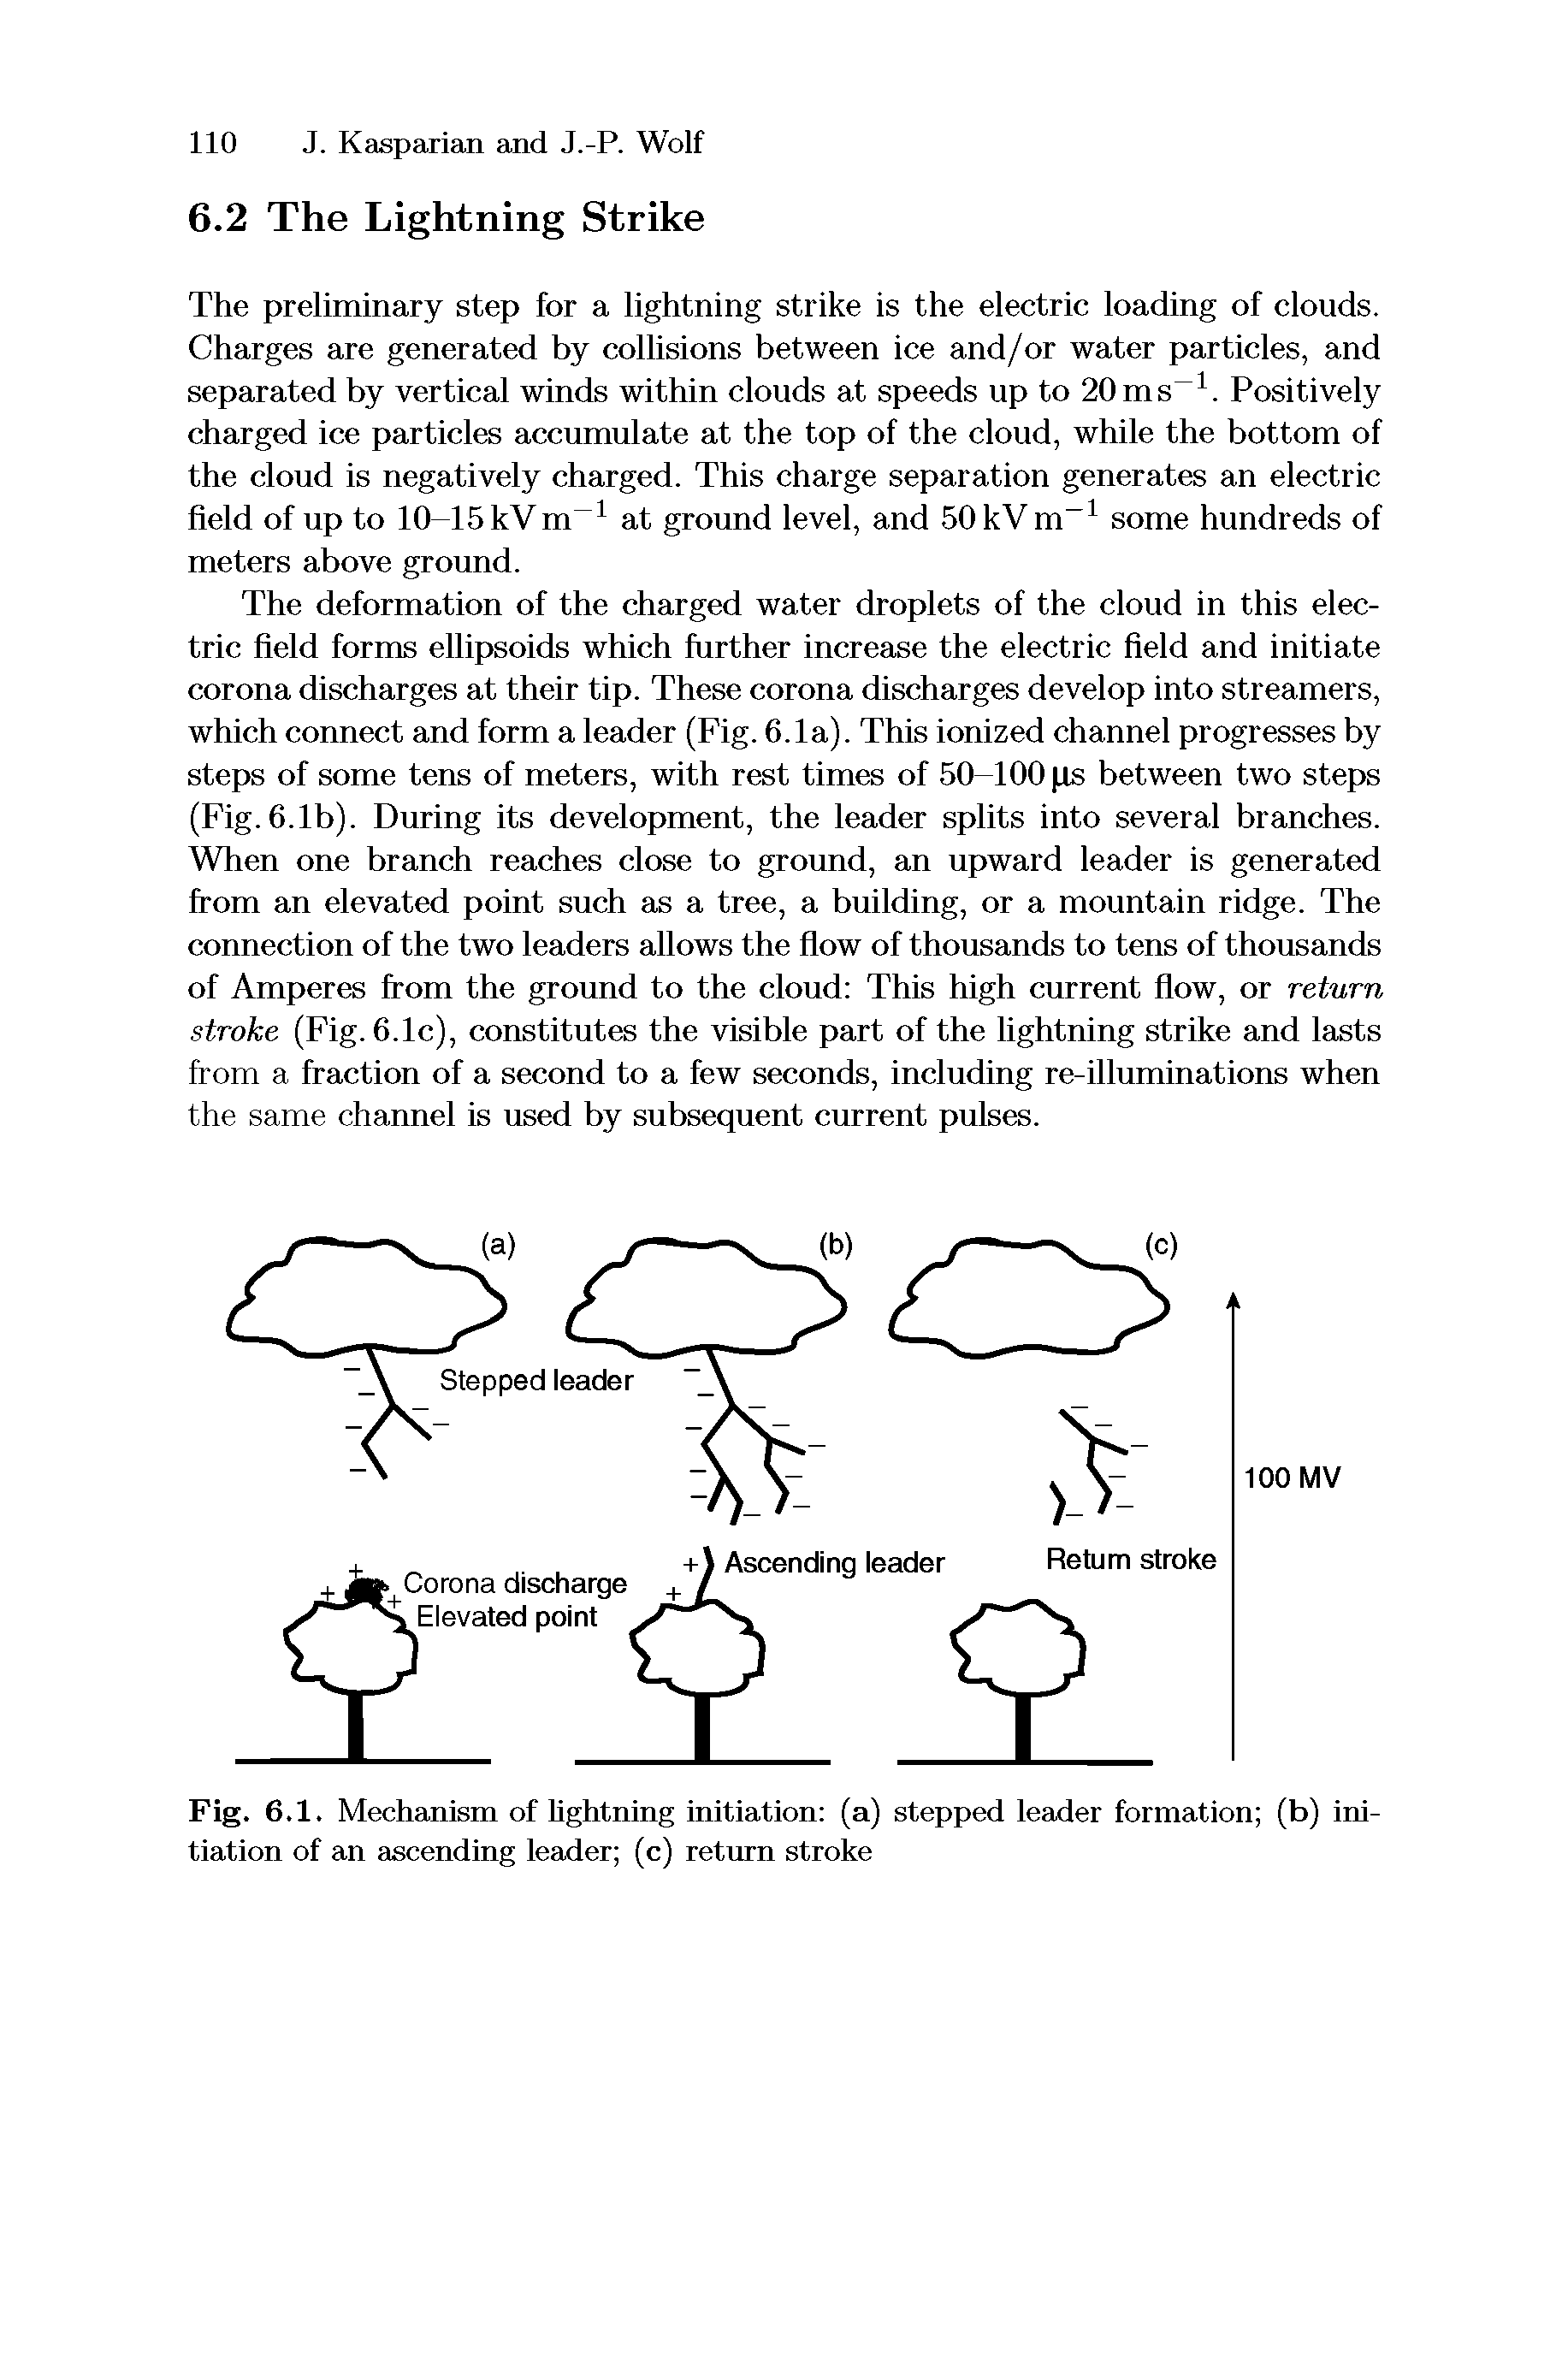 Fig. 6.1. Mechanism of lightning initiation (a) stepped leader formation (b) initiation of an ascending leader (c) return stroke...